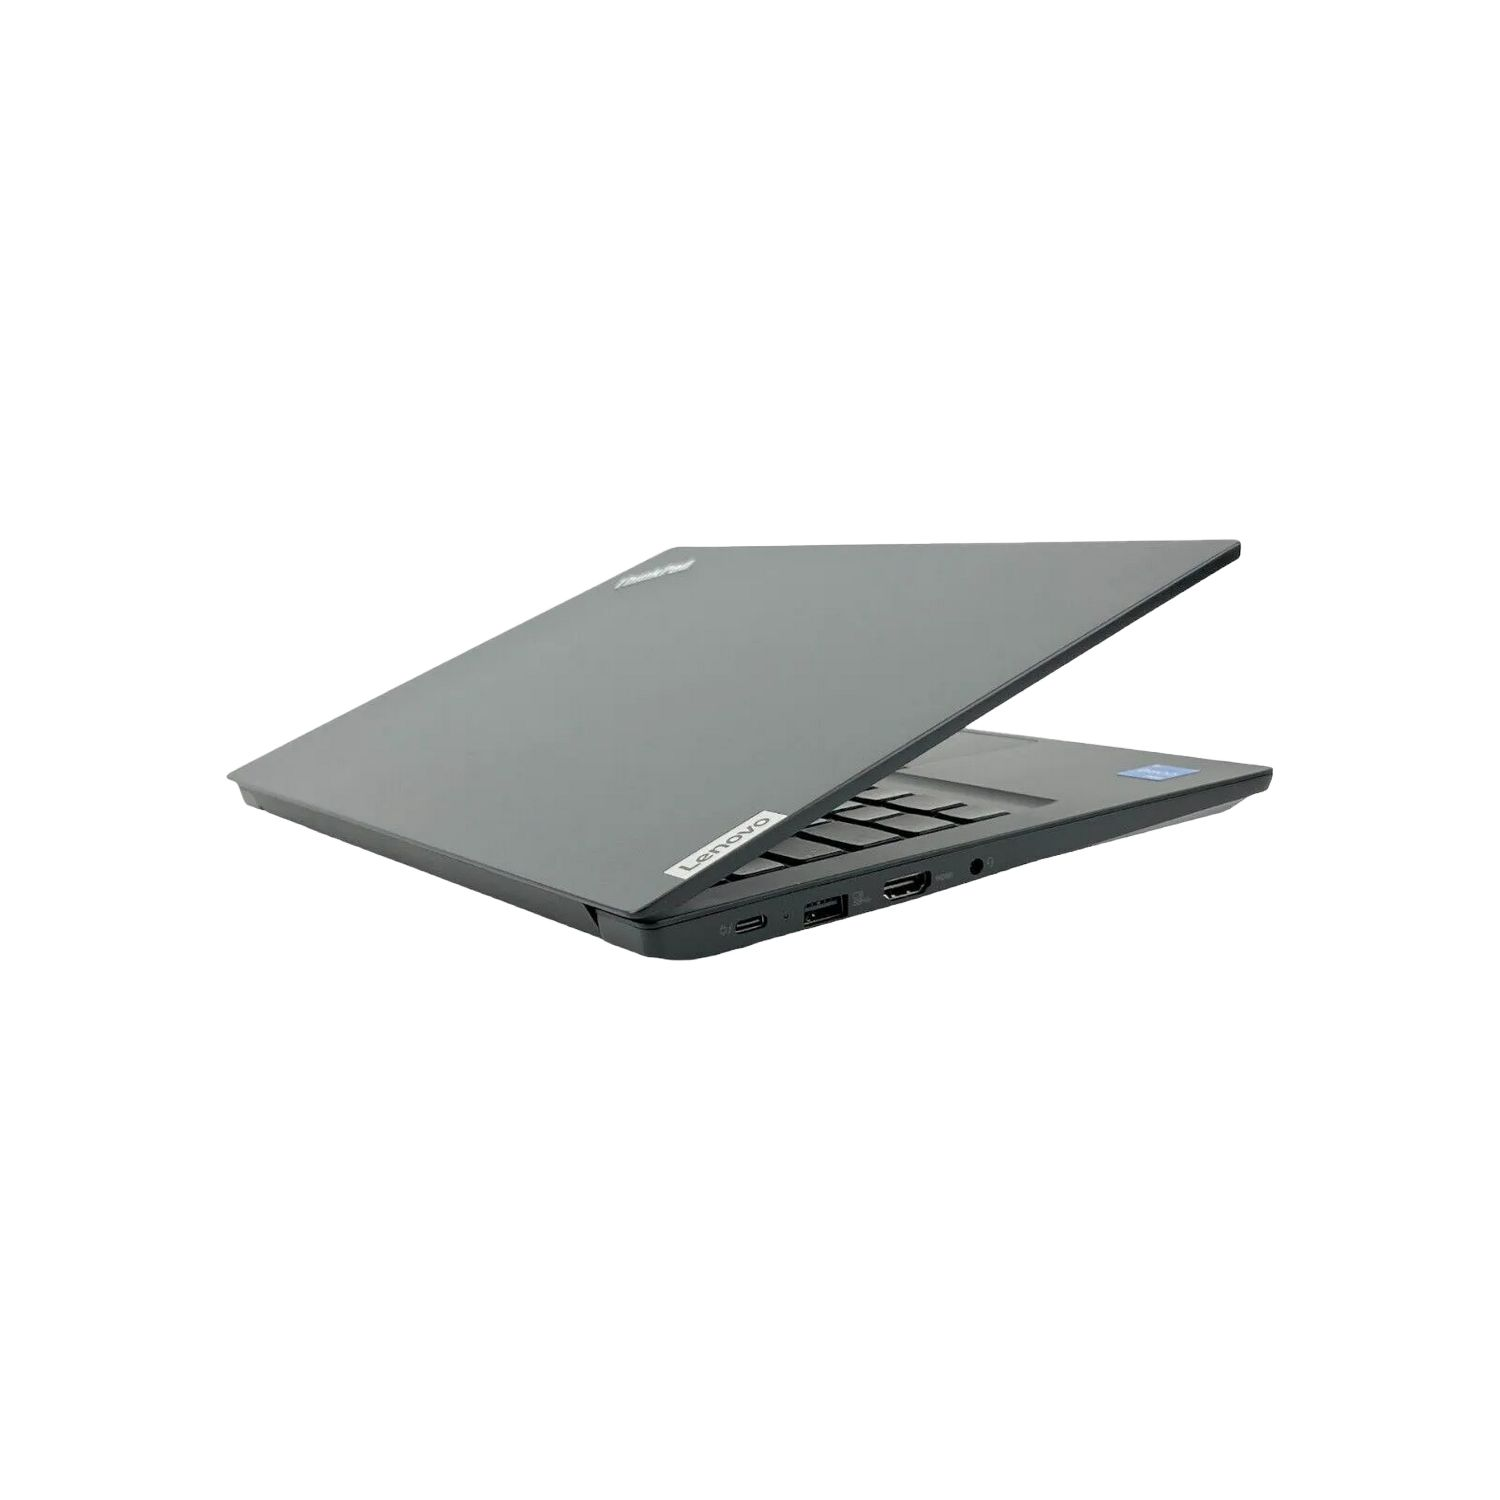 AMD Prozessor, Pro, Notebook 14 Office GB GB mit SSD, Display, E14, 2021 24 eingerichtet, ThinkPad Zoll Ryzen™ Schwarz LENOVO RAM, 2000 5 fertig